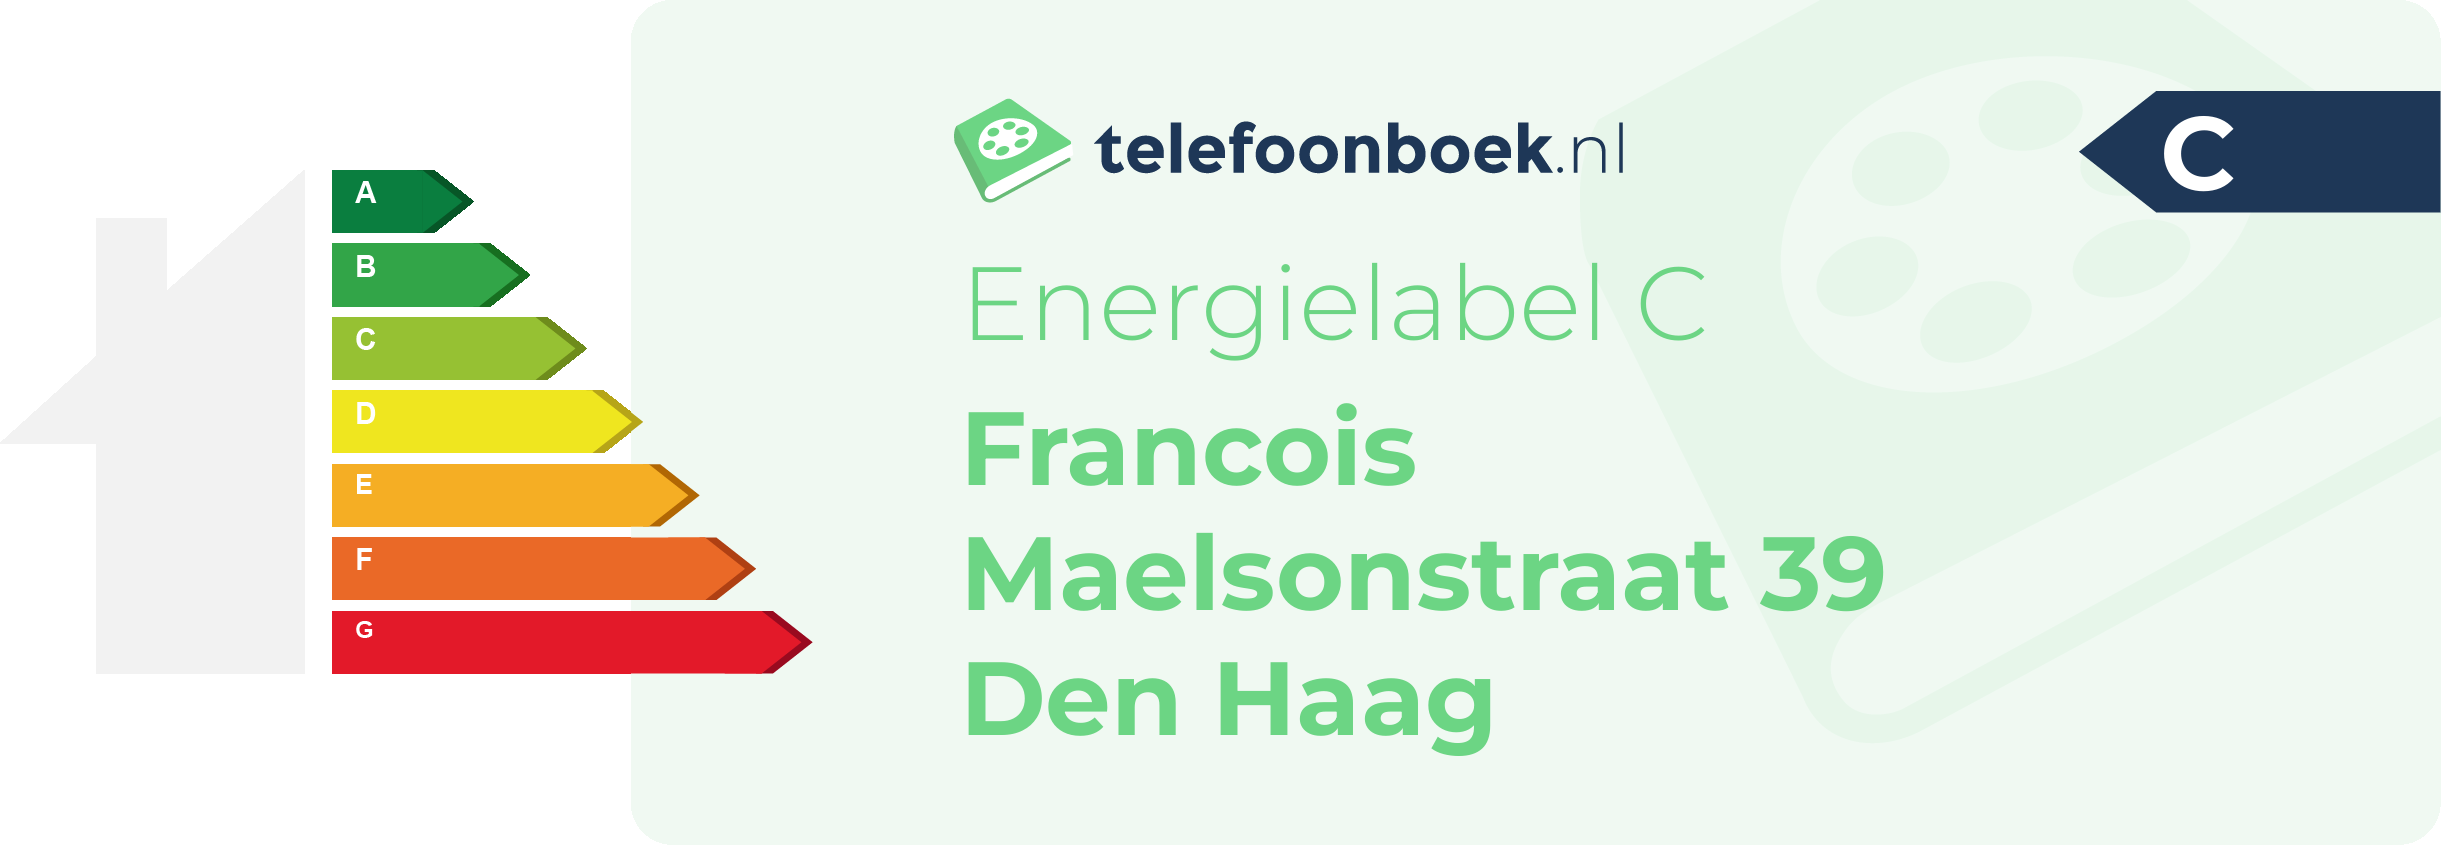 Energielabel Francois Maelsonstraat 39 Den Haag